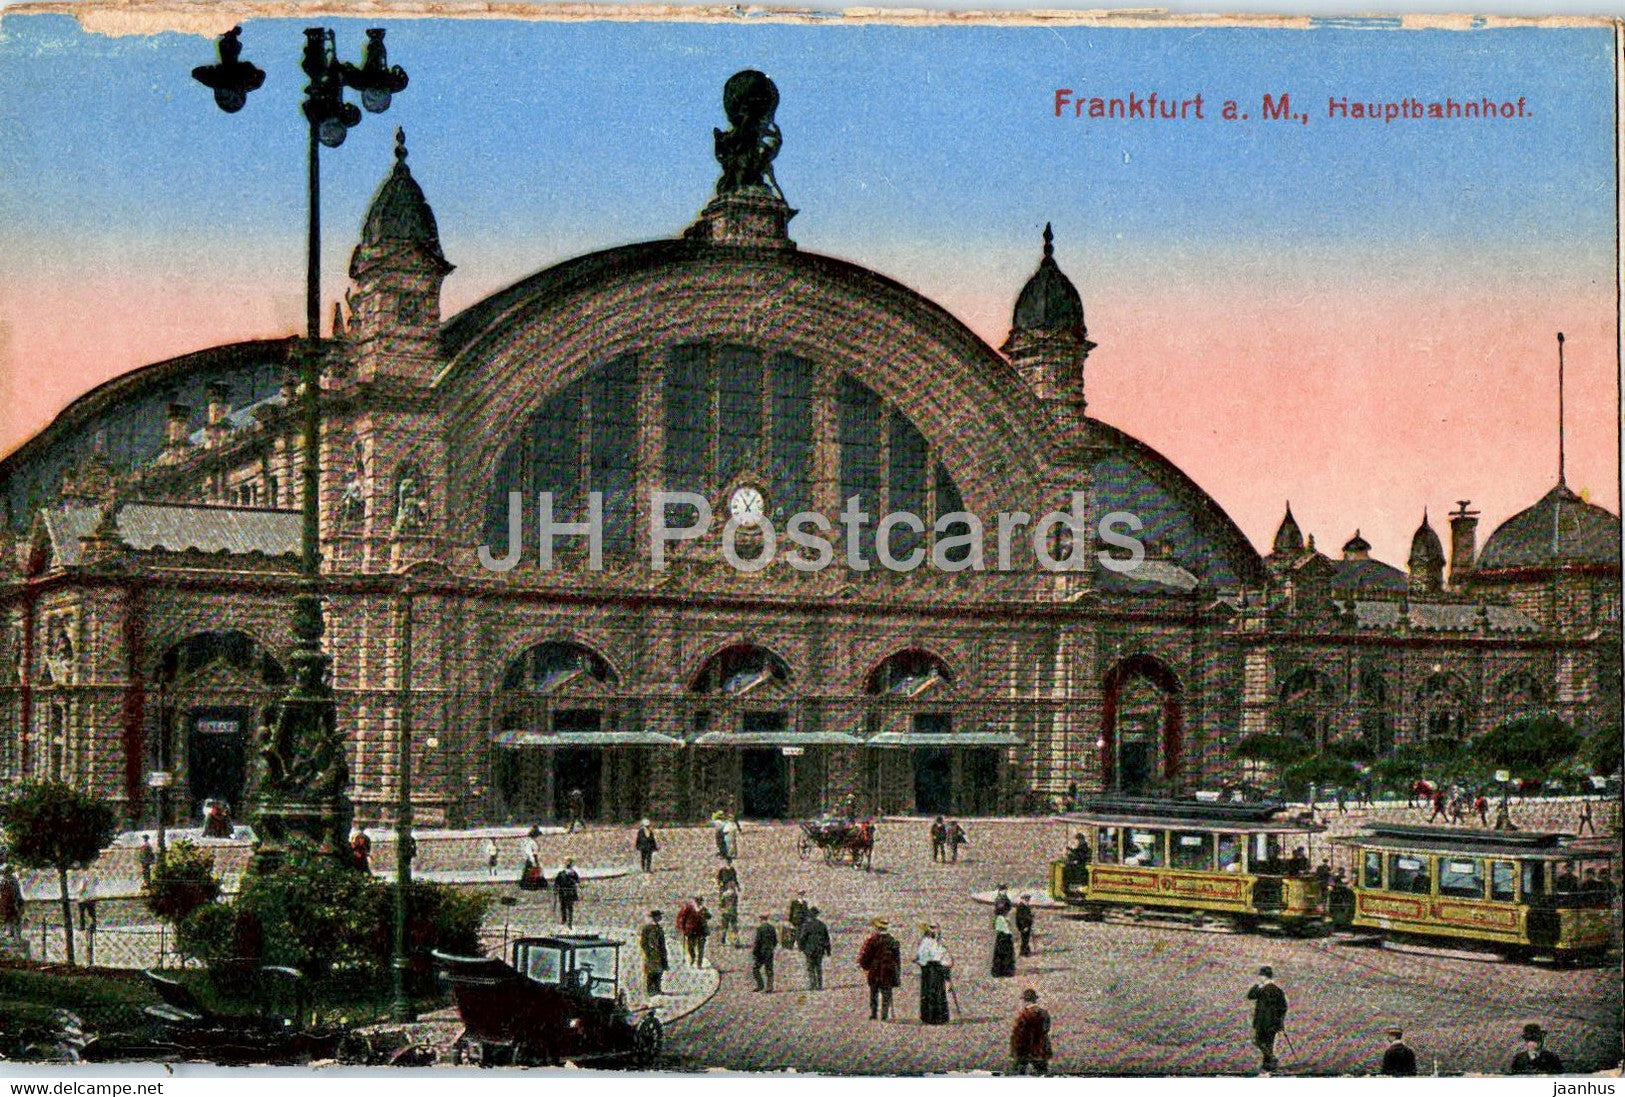 Frankfurt a M - Hauptbahnhof - tram - railway station - old postcard - 1919 - Germany - used - JH Postcards